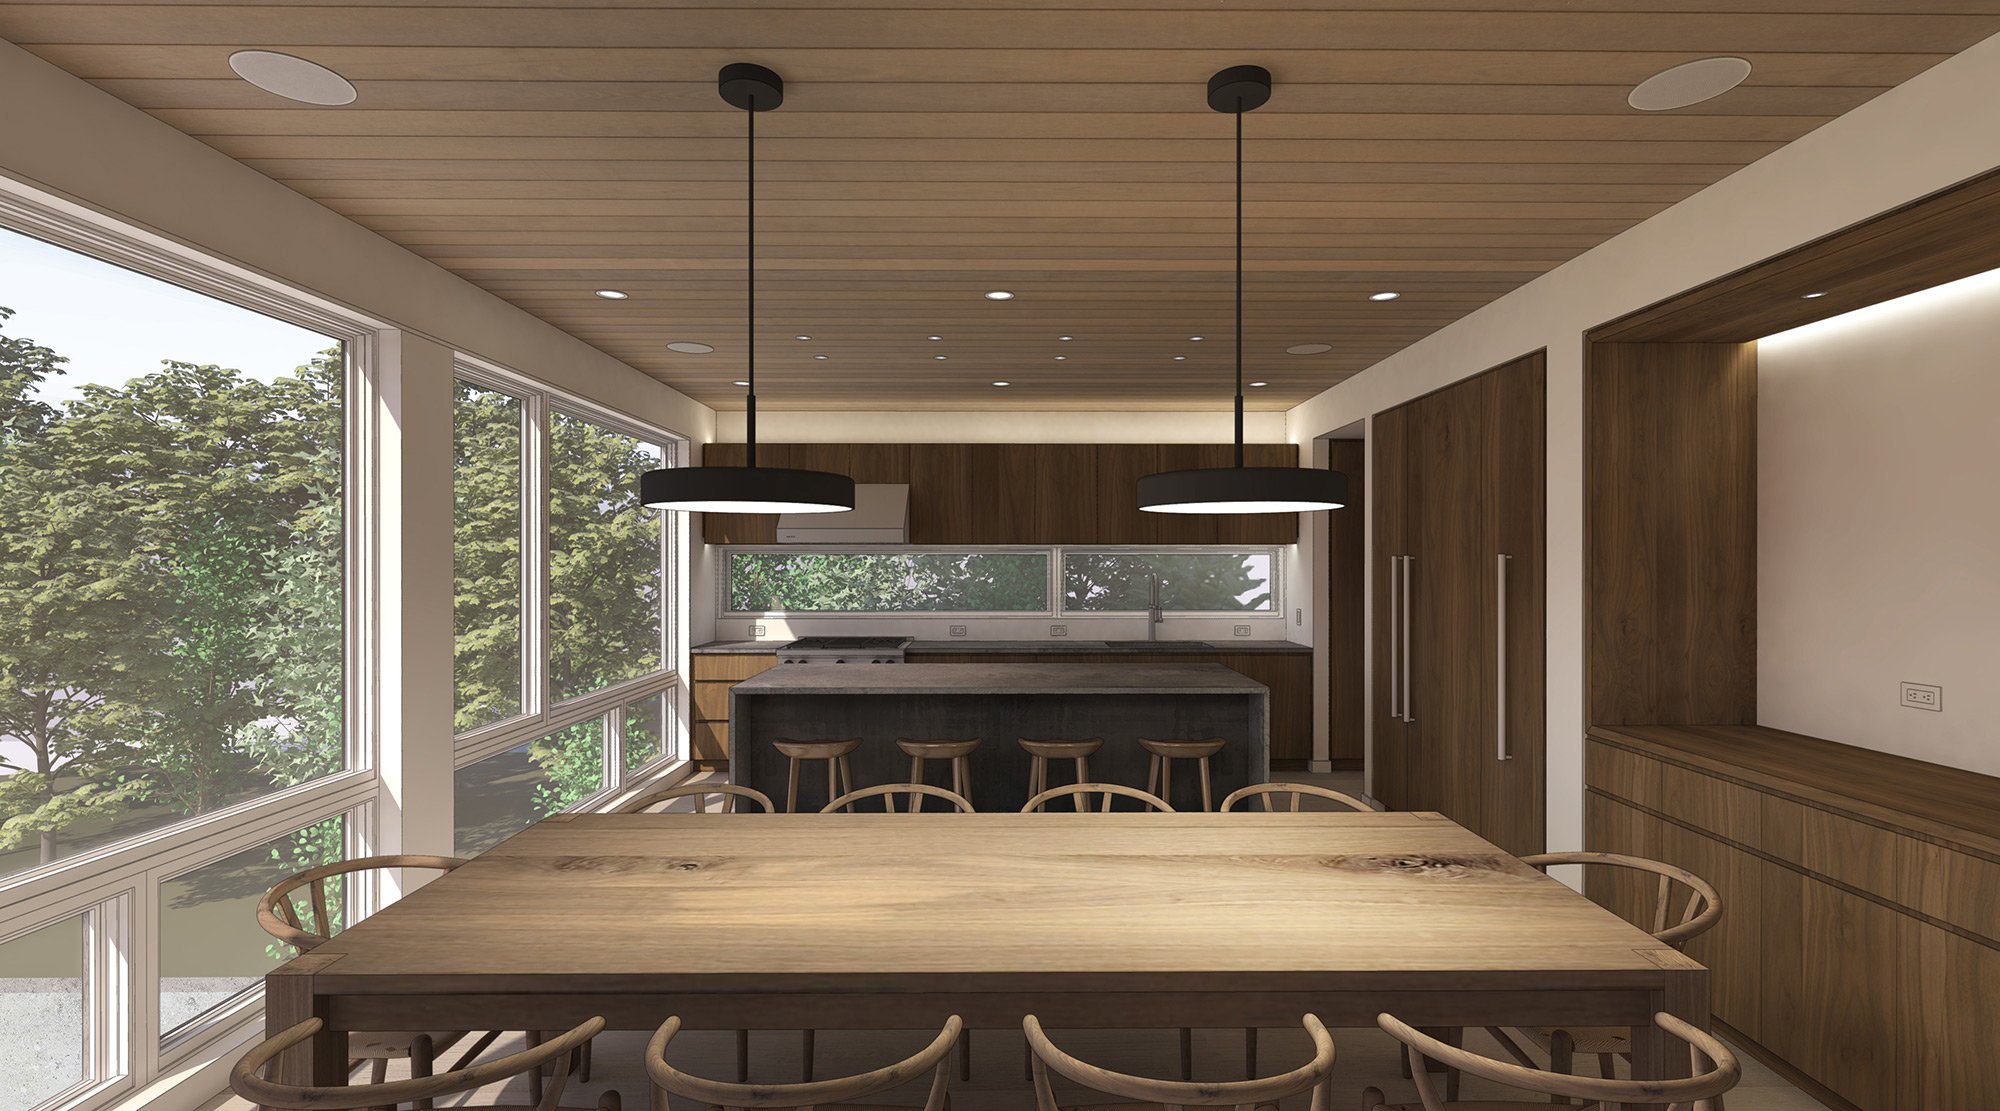 res4-resolution-4-architecture-peck-lake-residence-modern-modular-prefab-home-new-york-adirondacks-custom-high-end-residential-dining-pendants-kitchen-walnut-millwork-cedar-ceiling.jpg